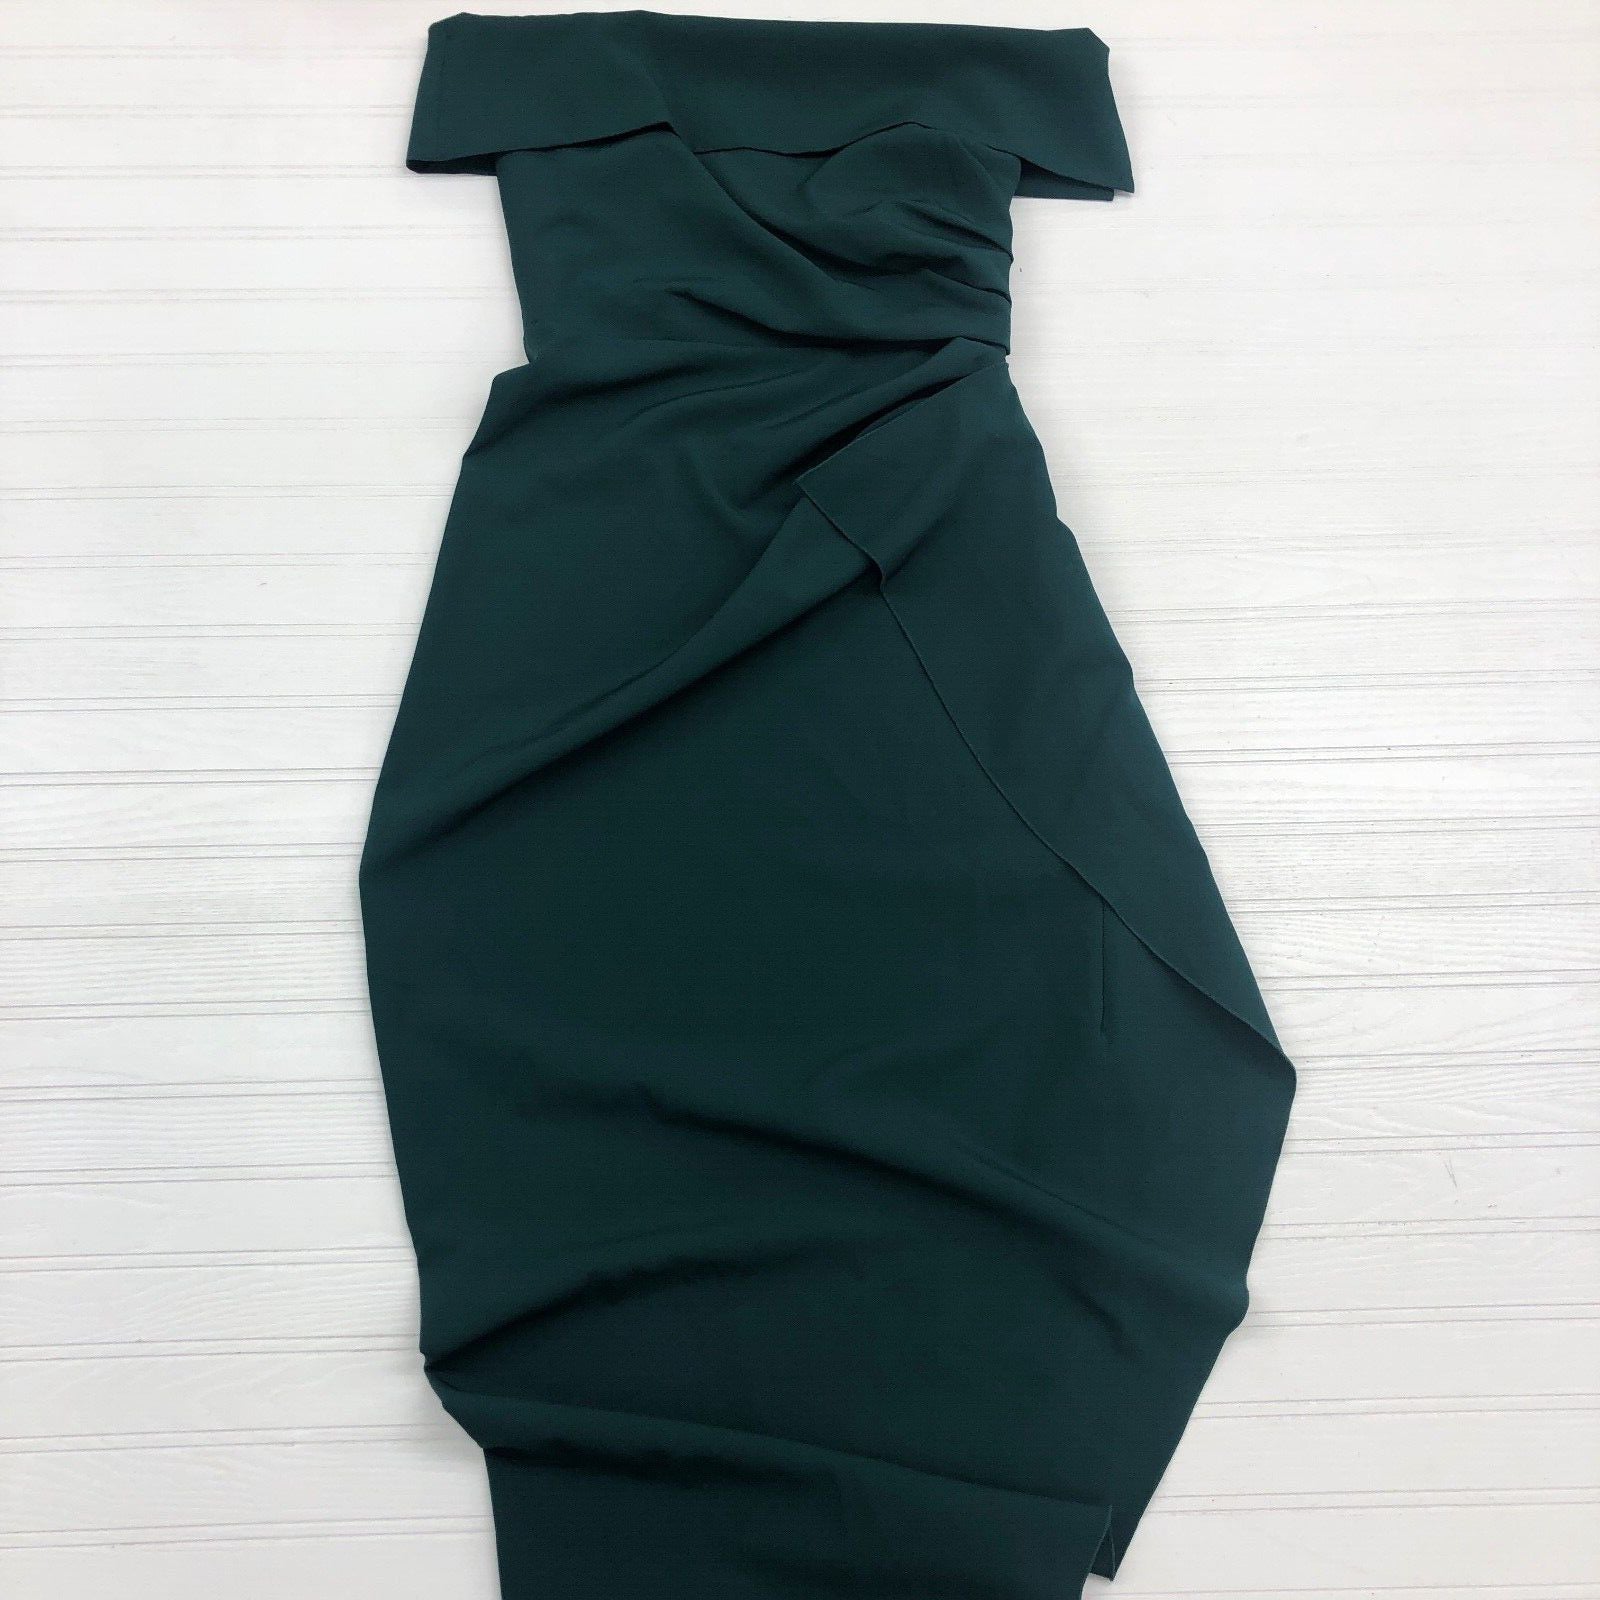 Vince Camuto Green Off Shoulder Asymmetrical Dress Women's Petite Size 6P New